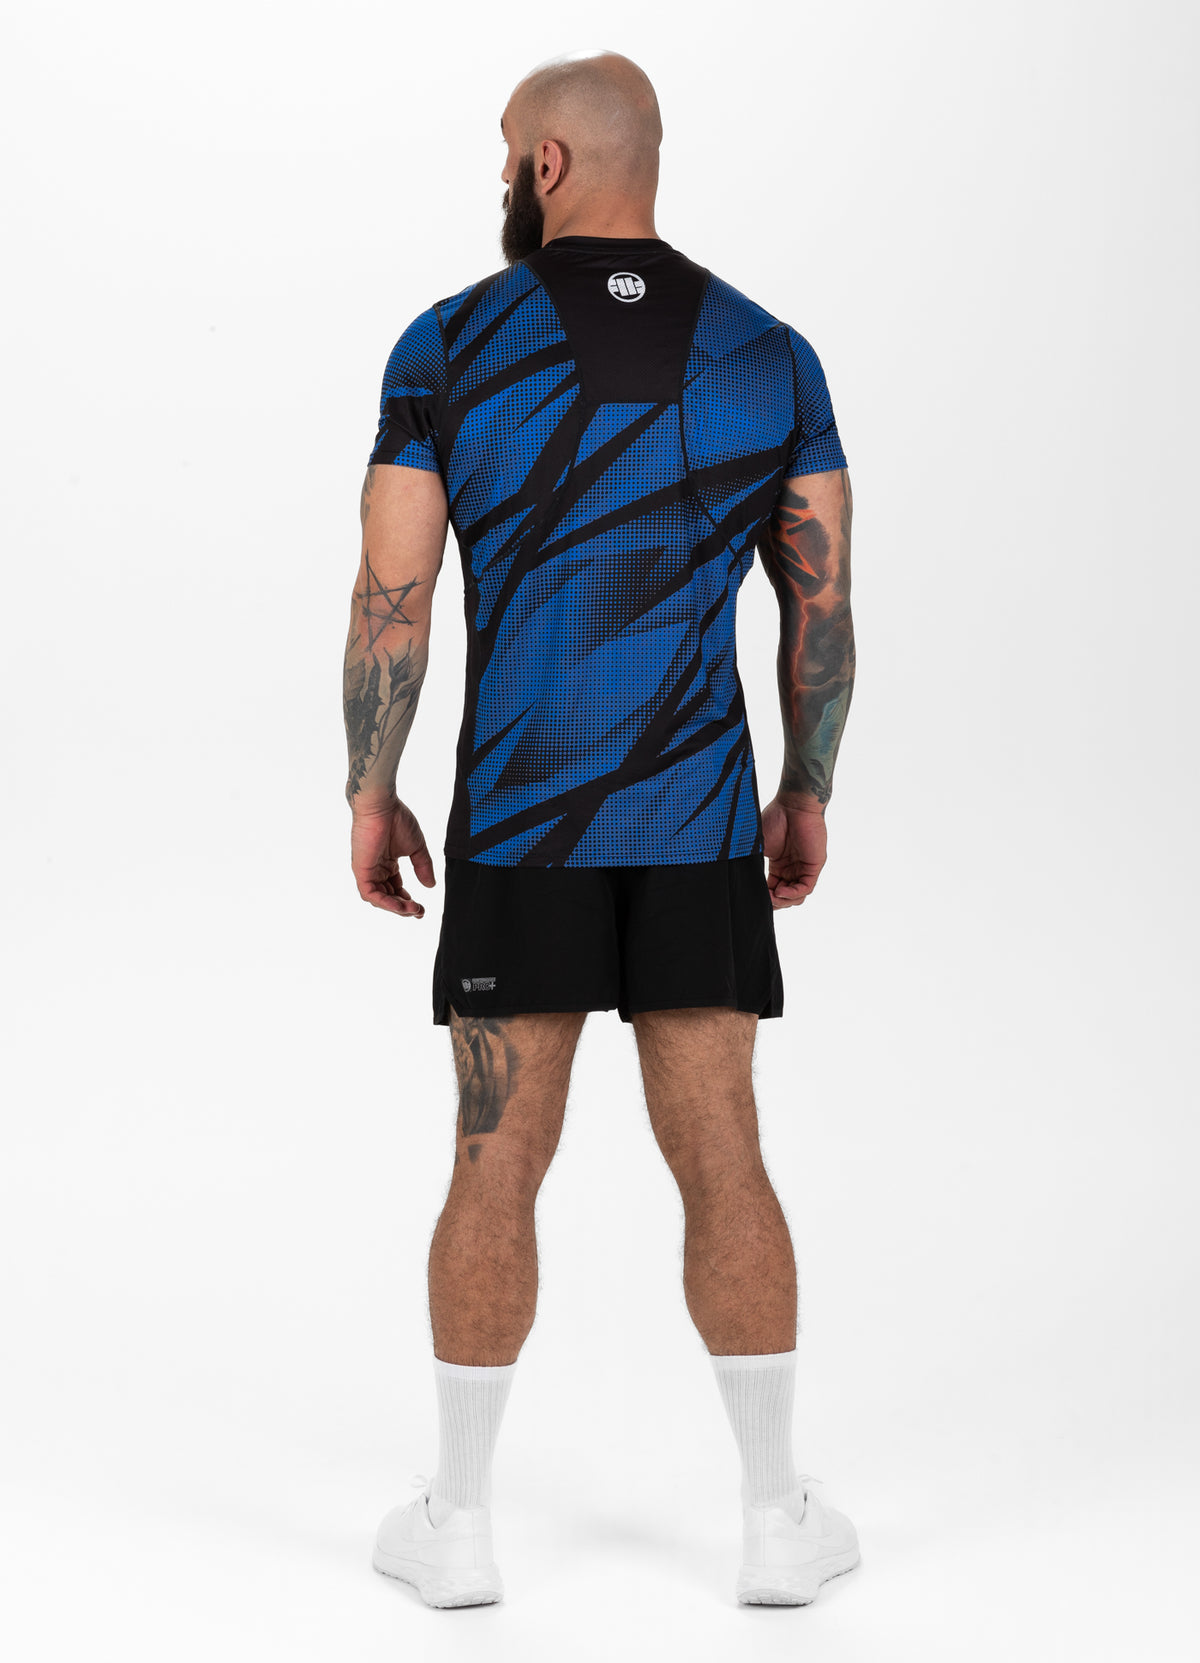 DOT CAMO 2 Blue Sports T-Shirt - Pitbullstore.eu